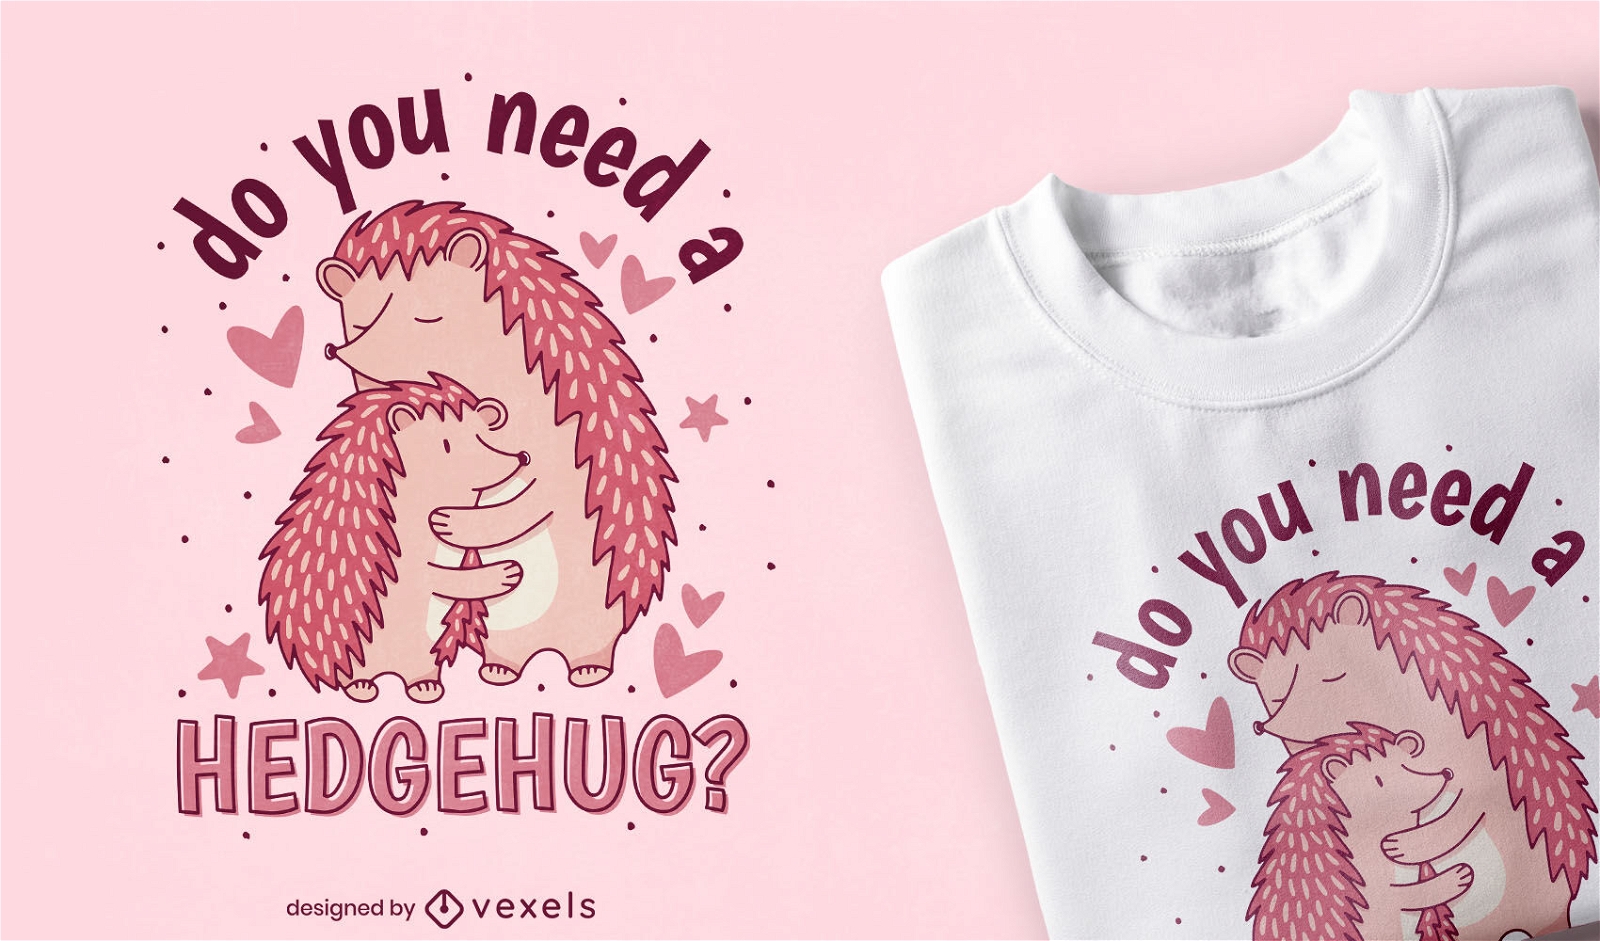 Cute hedgehog hug t-shirt design